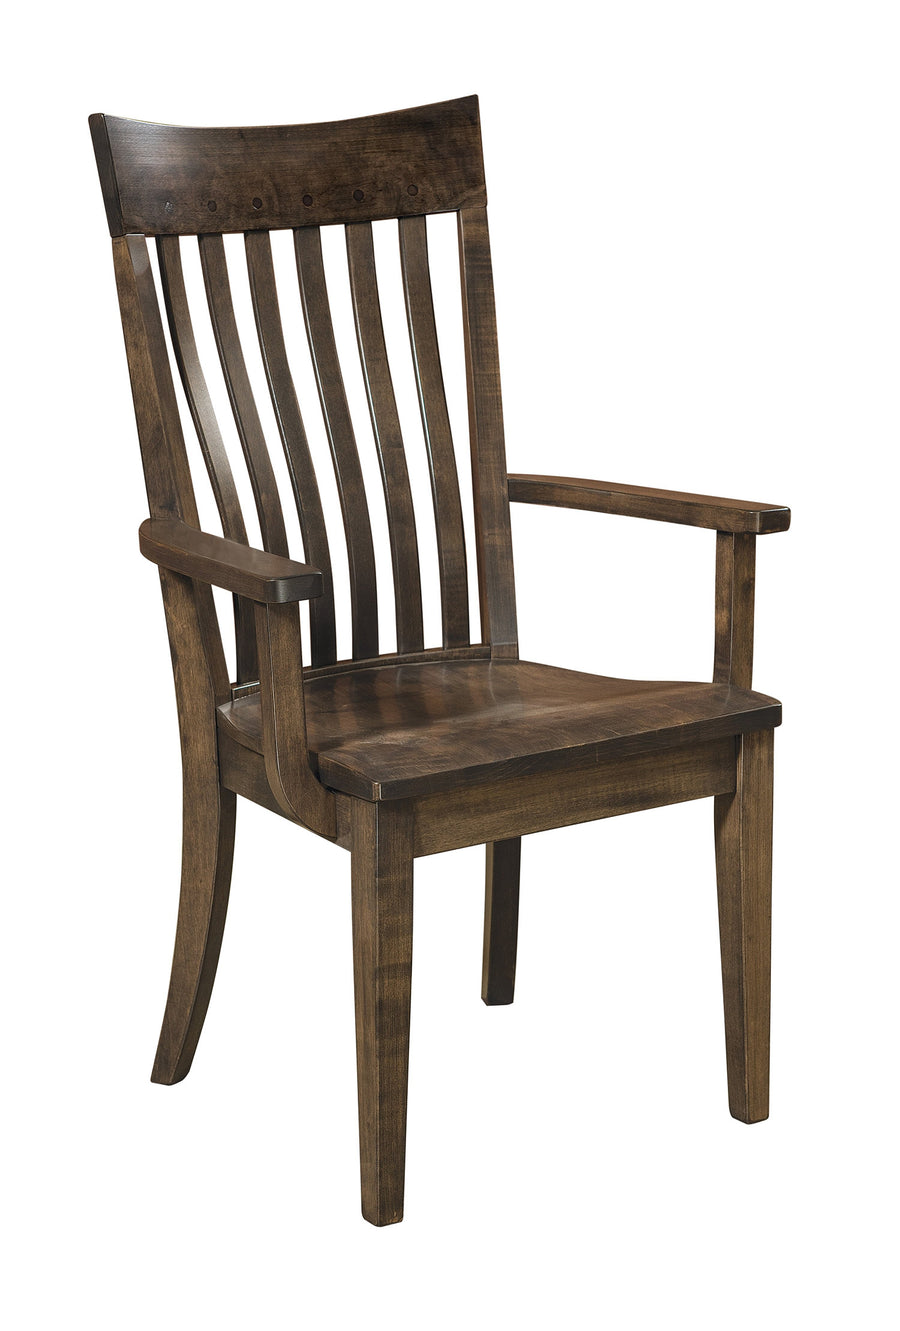 Fontana Amish Arm Chair - Charleston Amish Furniture